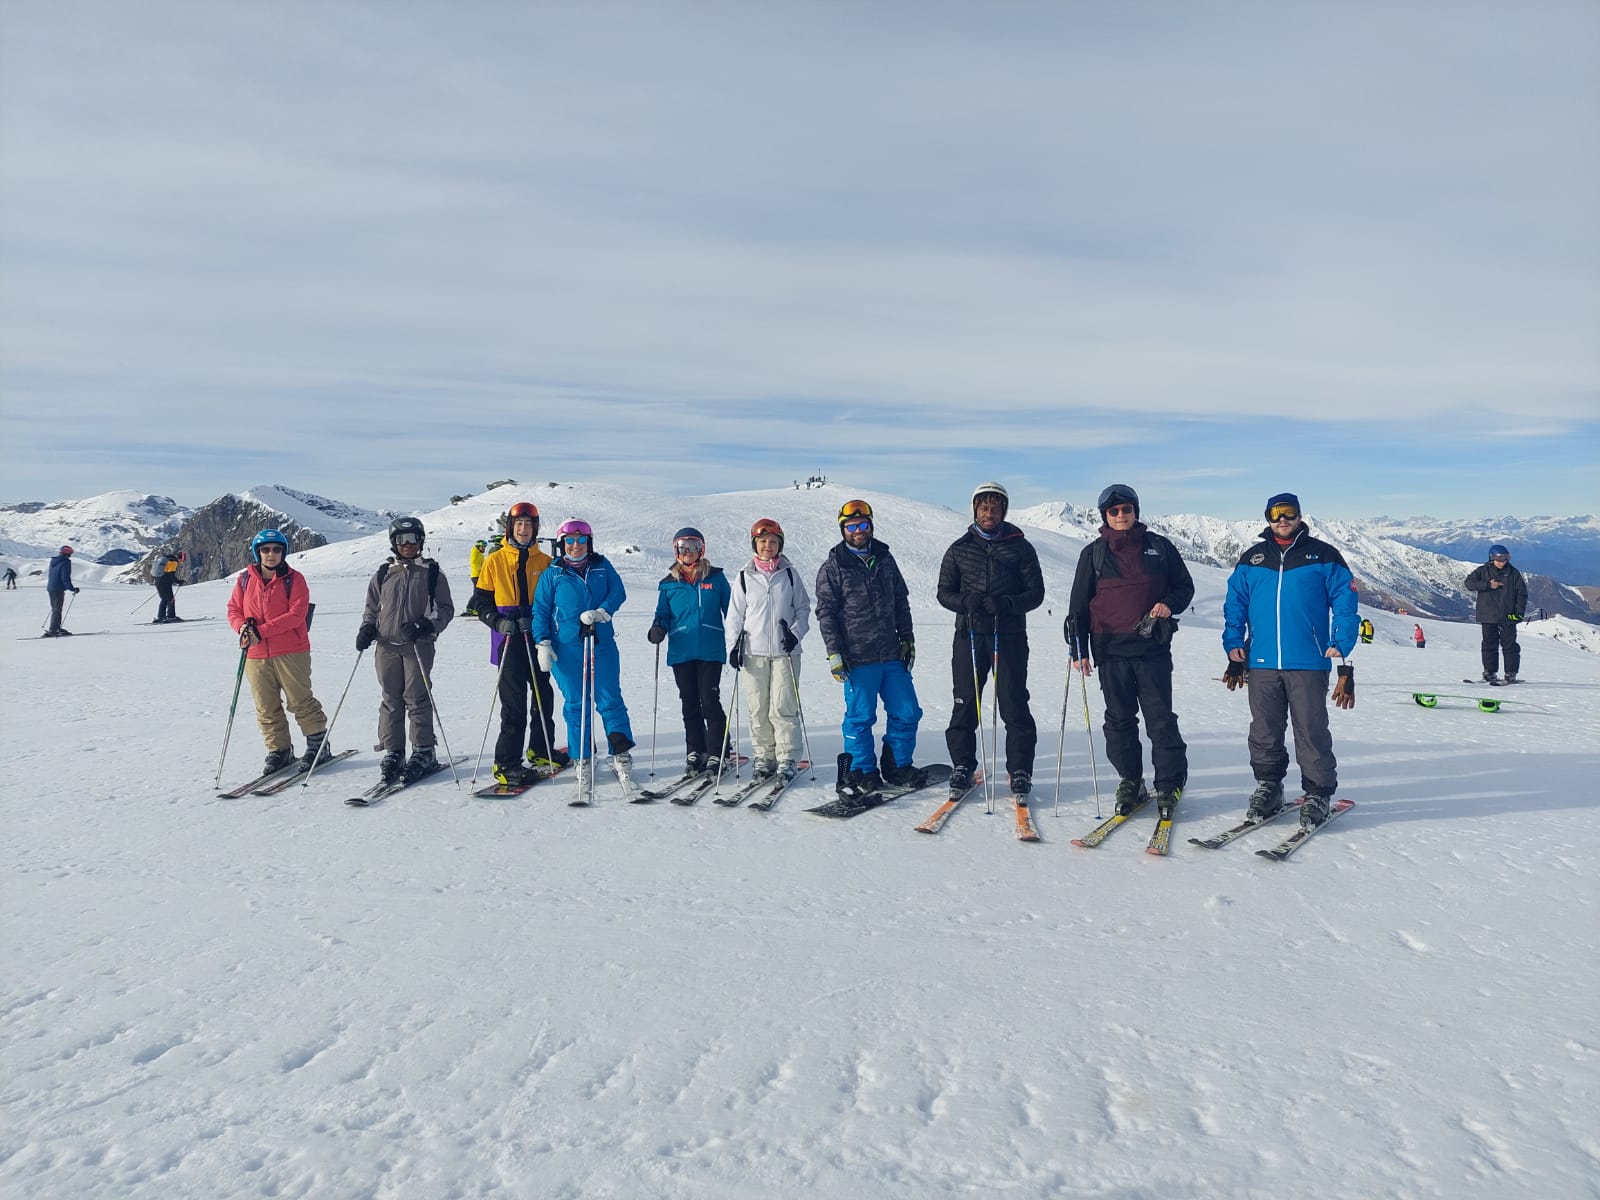 Halsbury staff on ski inspection visit